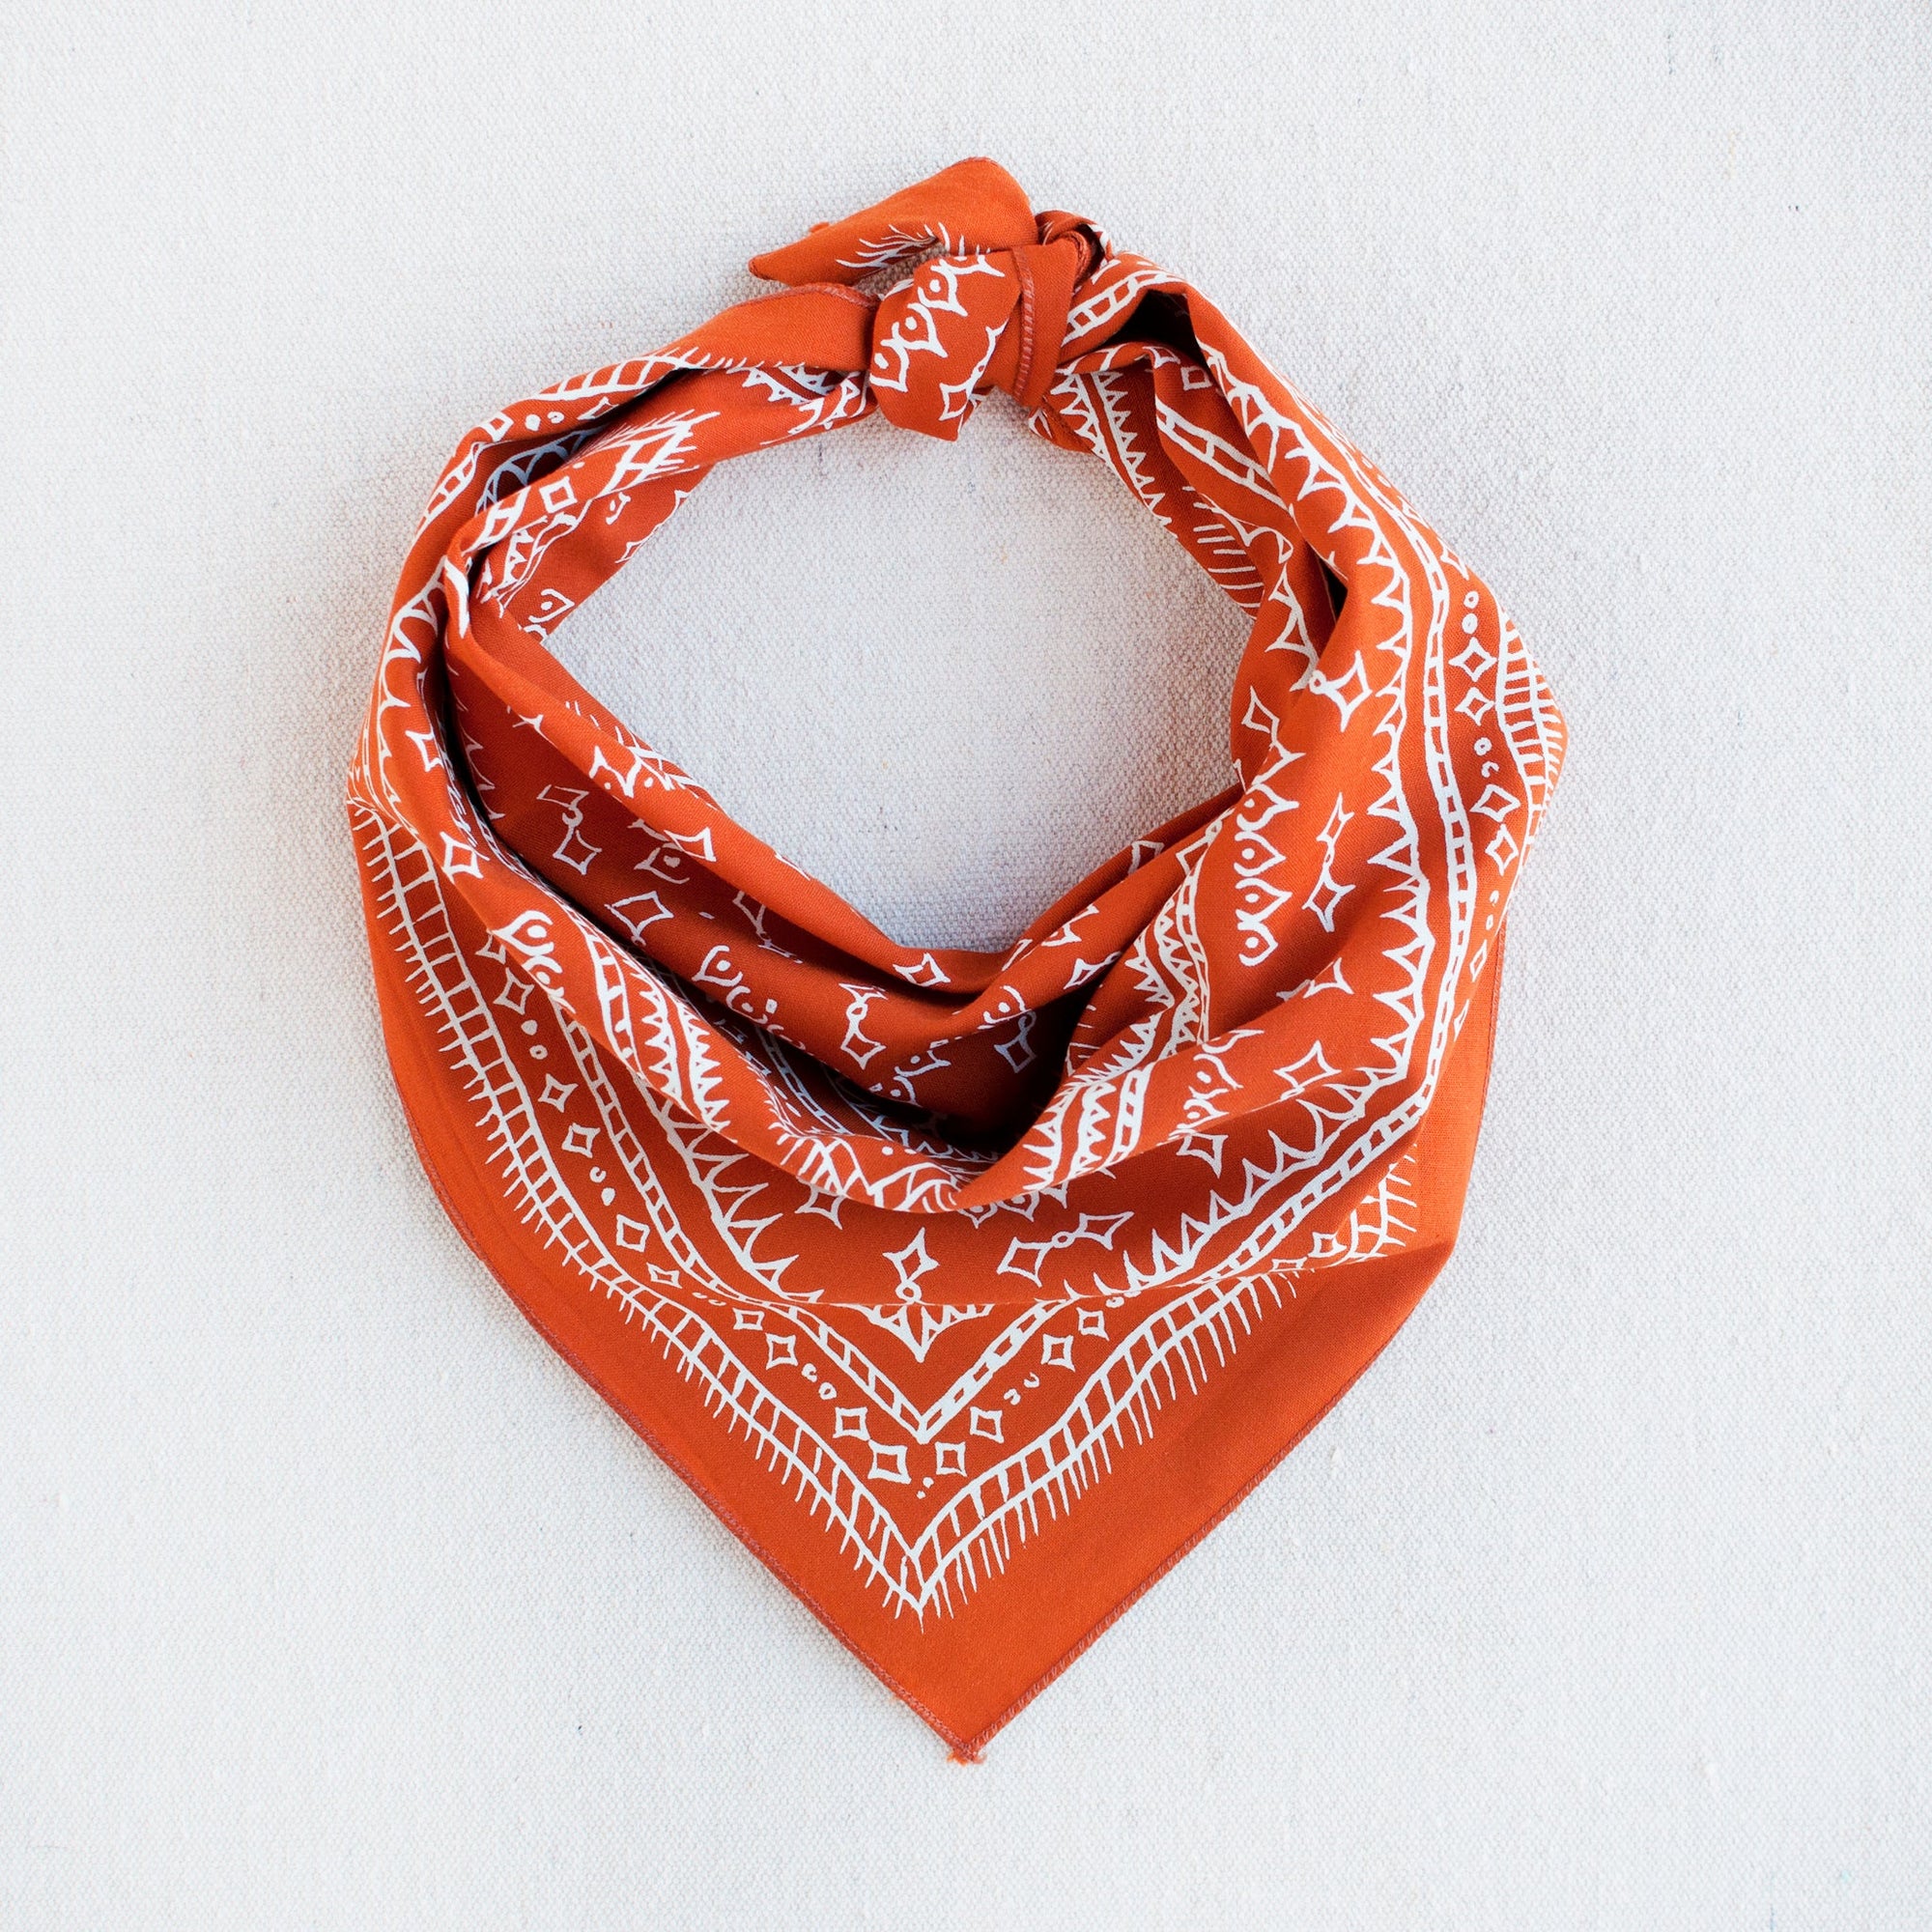 Marmalade orange and white hand drawn diamond printed bandana, styled in a triangle, bandit style. 